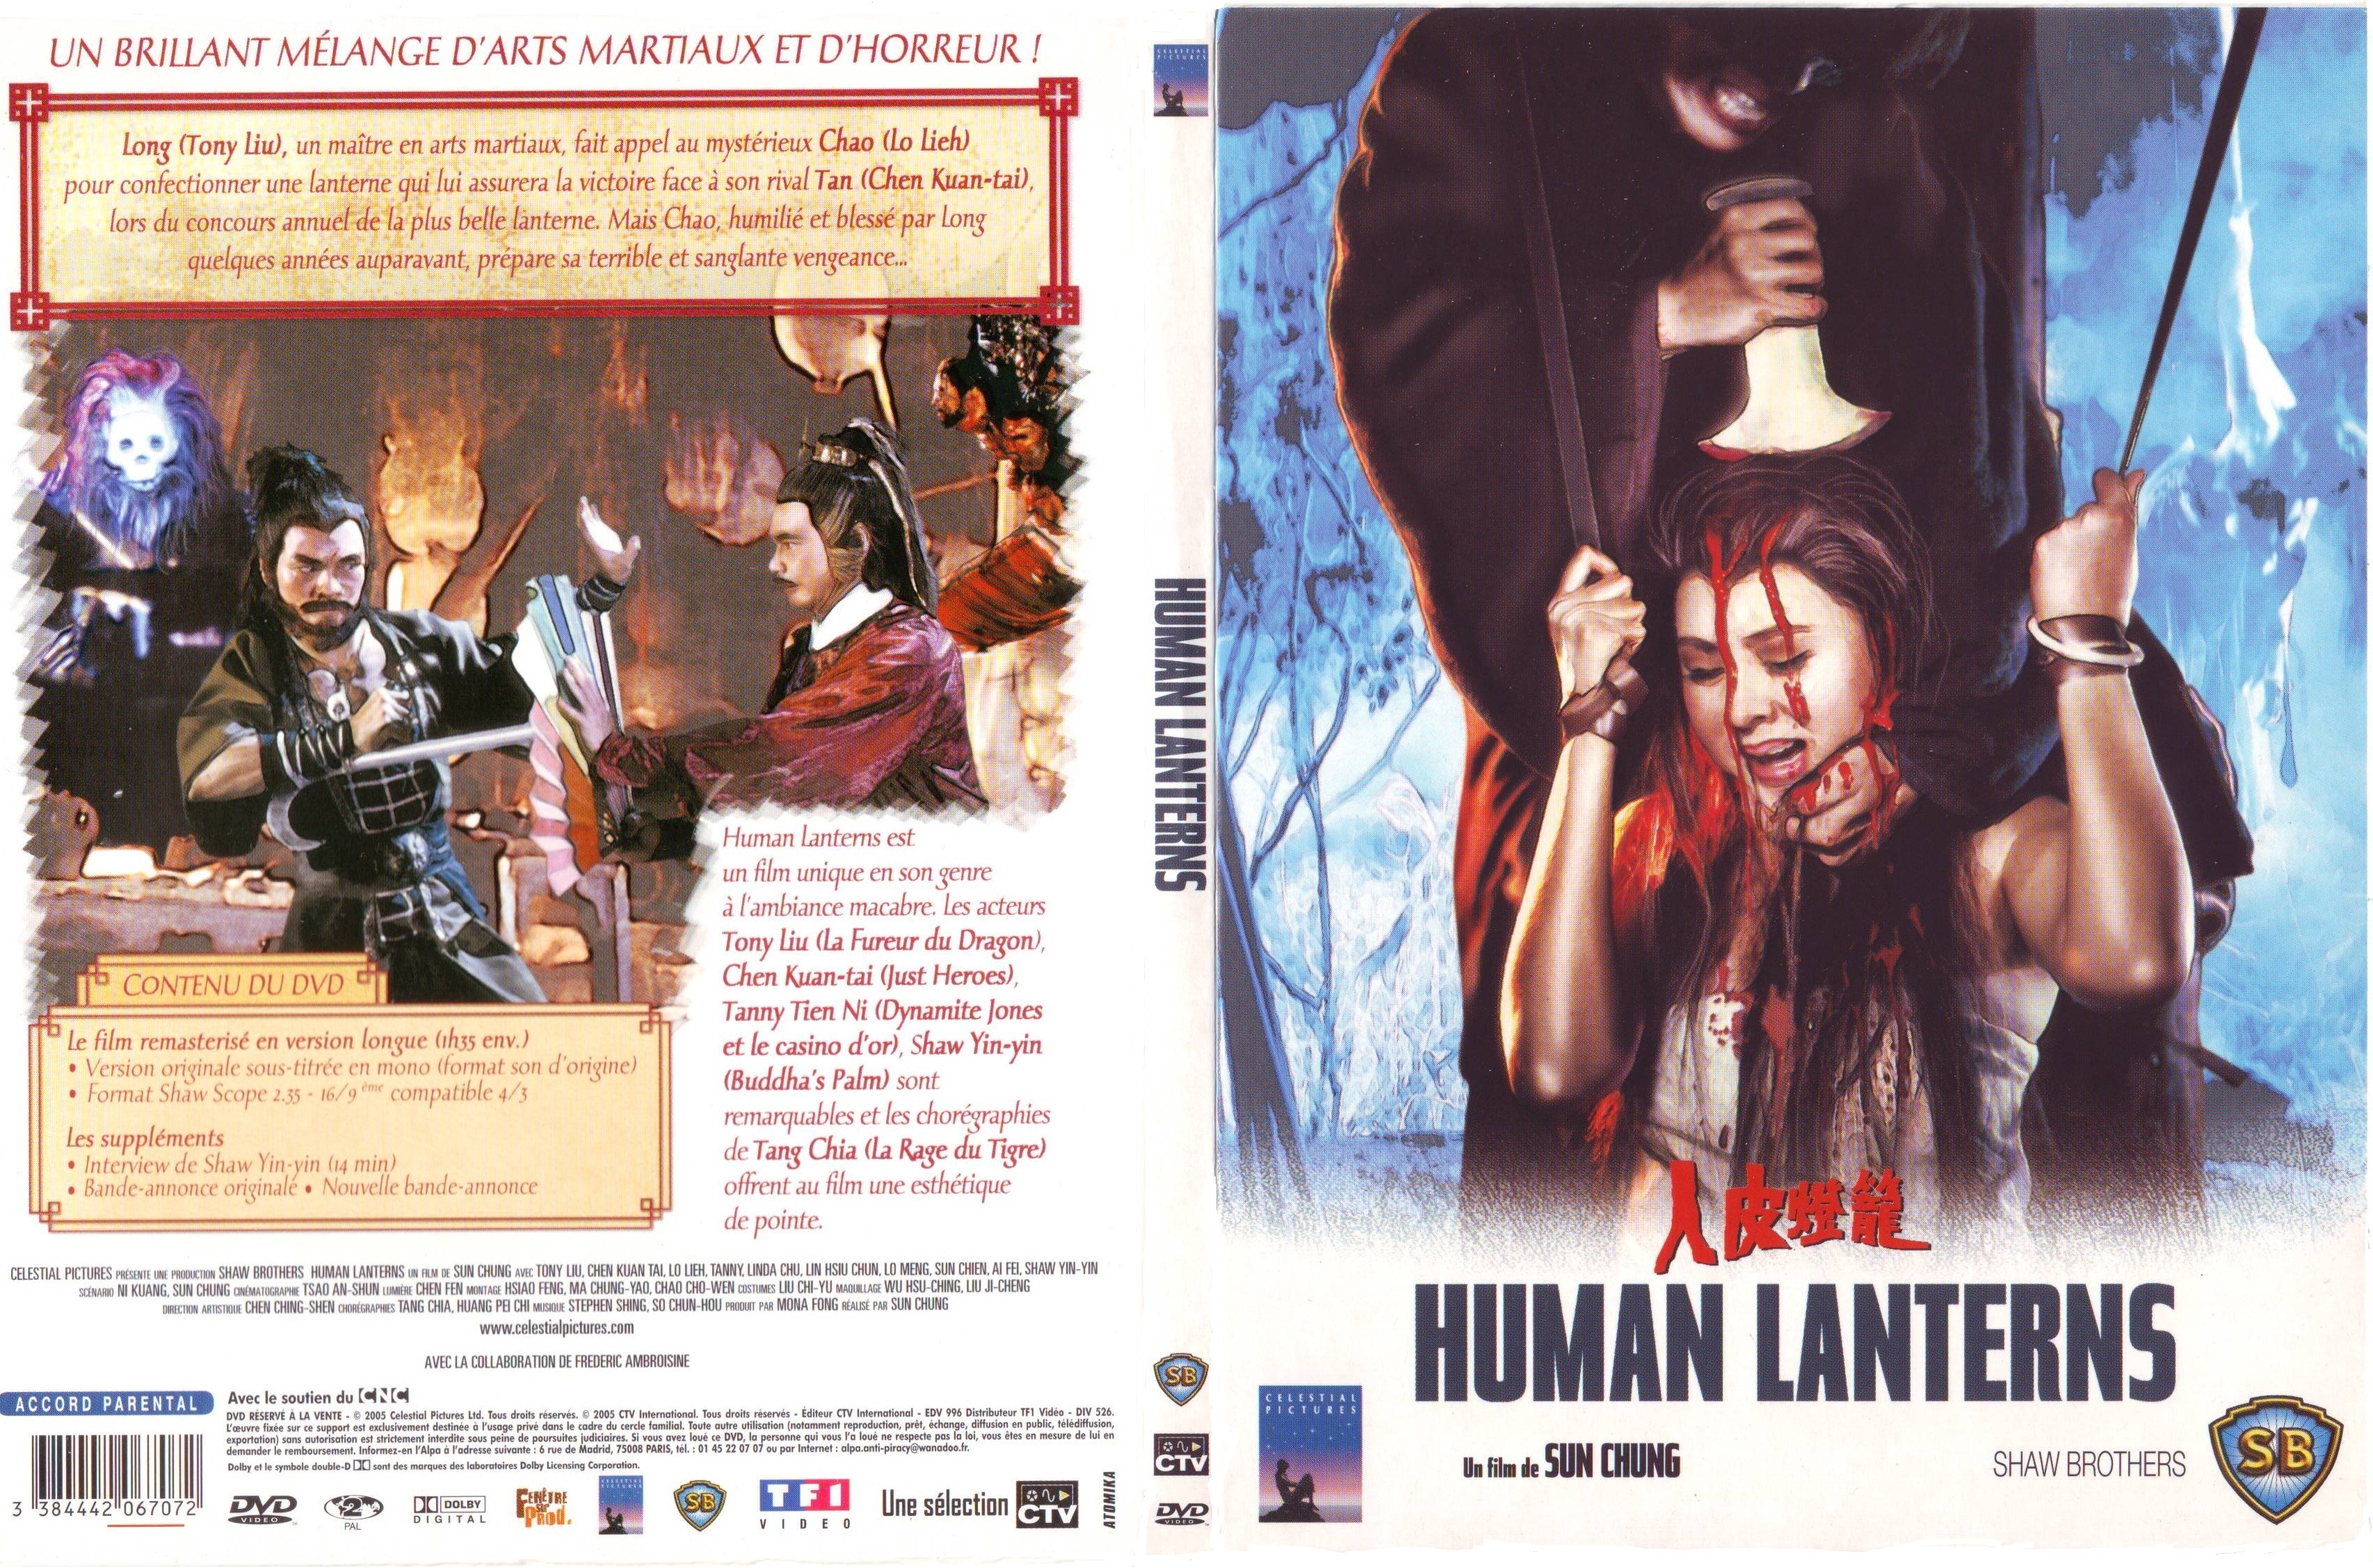 Jaquette DVD Human lanterns